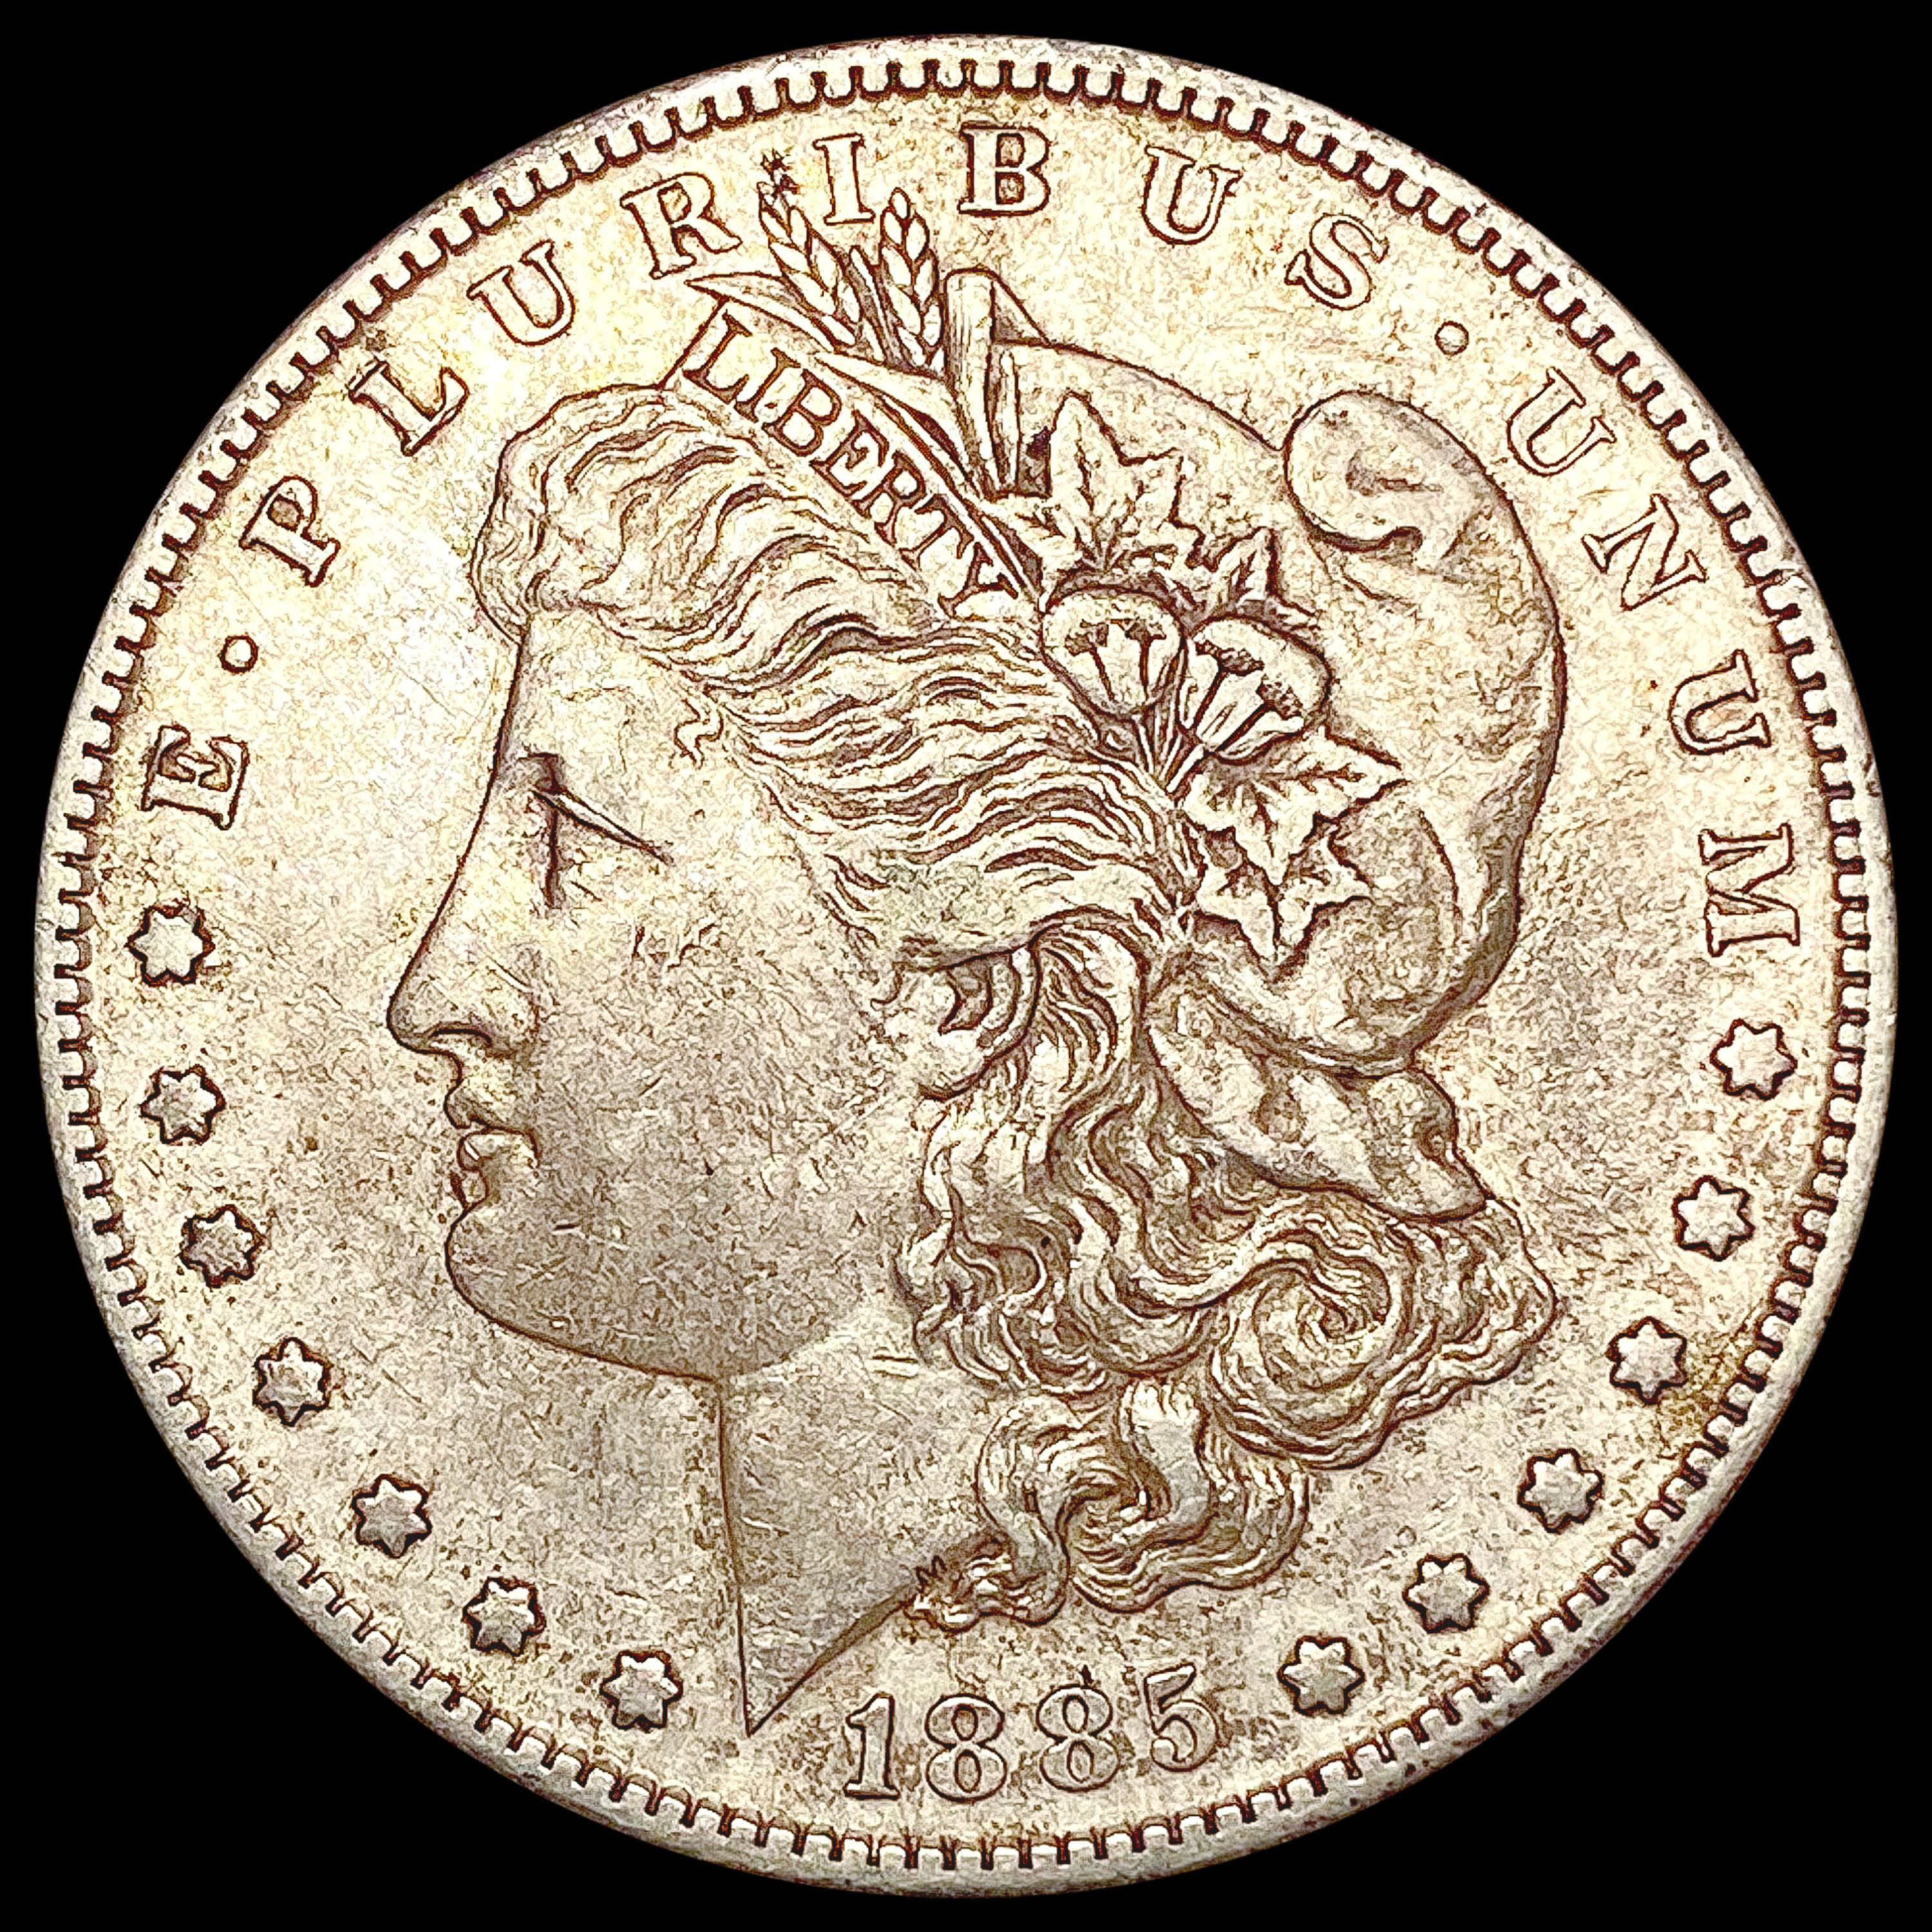 1885-S Morgan Silver Dollar NEARLY UNCIRCULATED